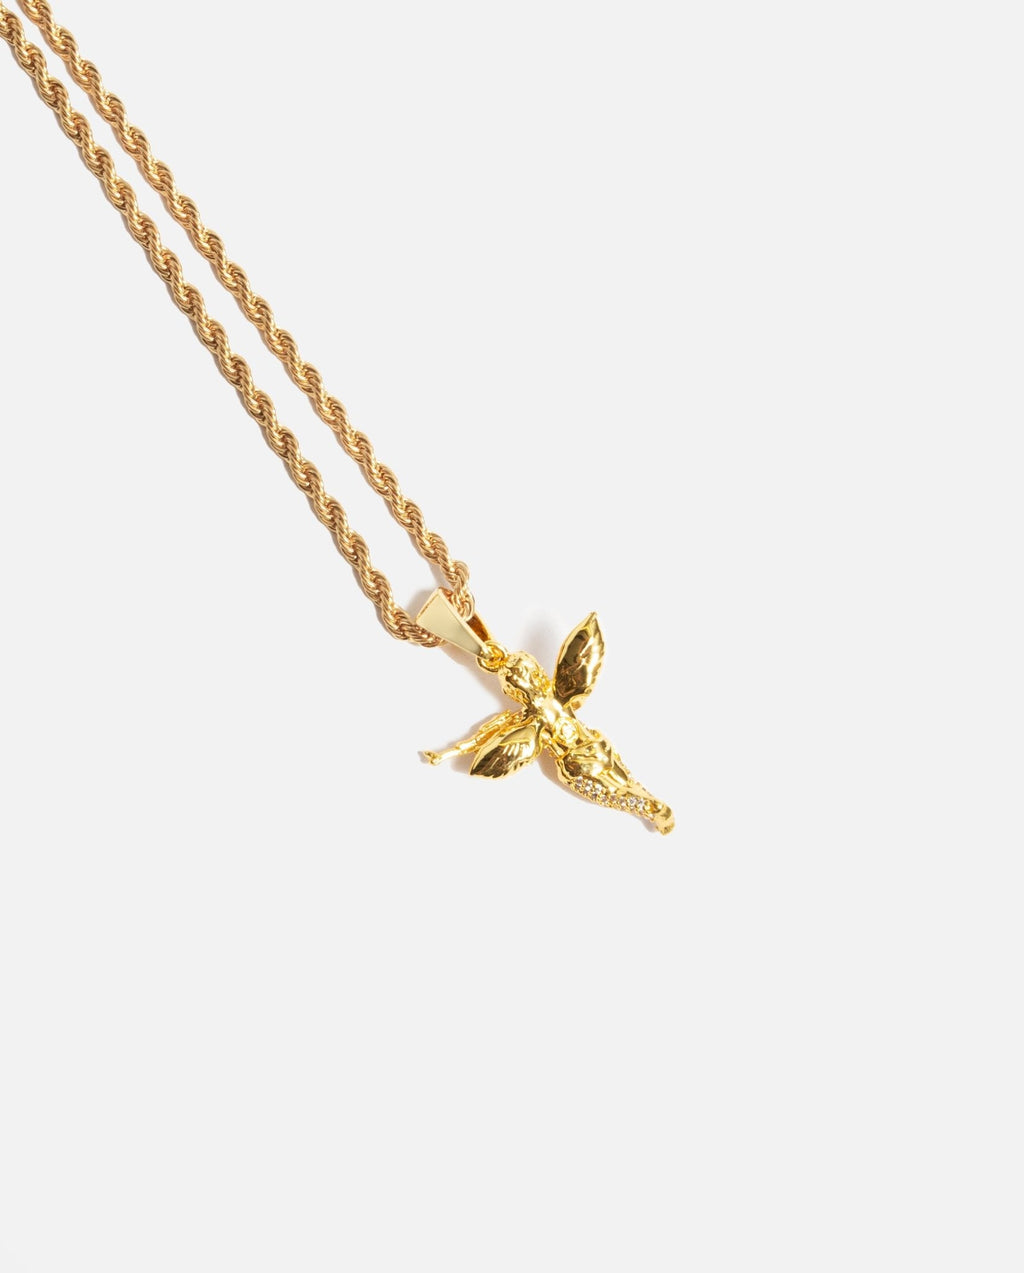 Gun Necklace Pendant Rose Gold